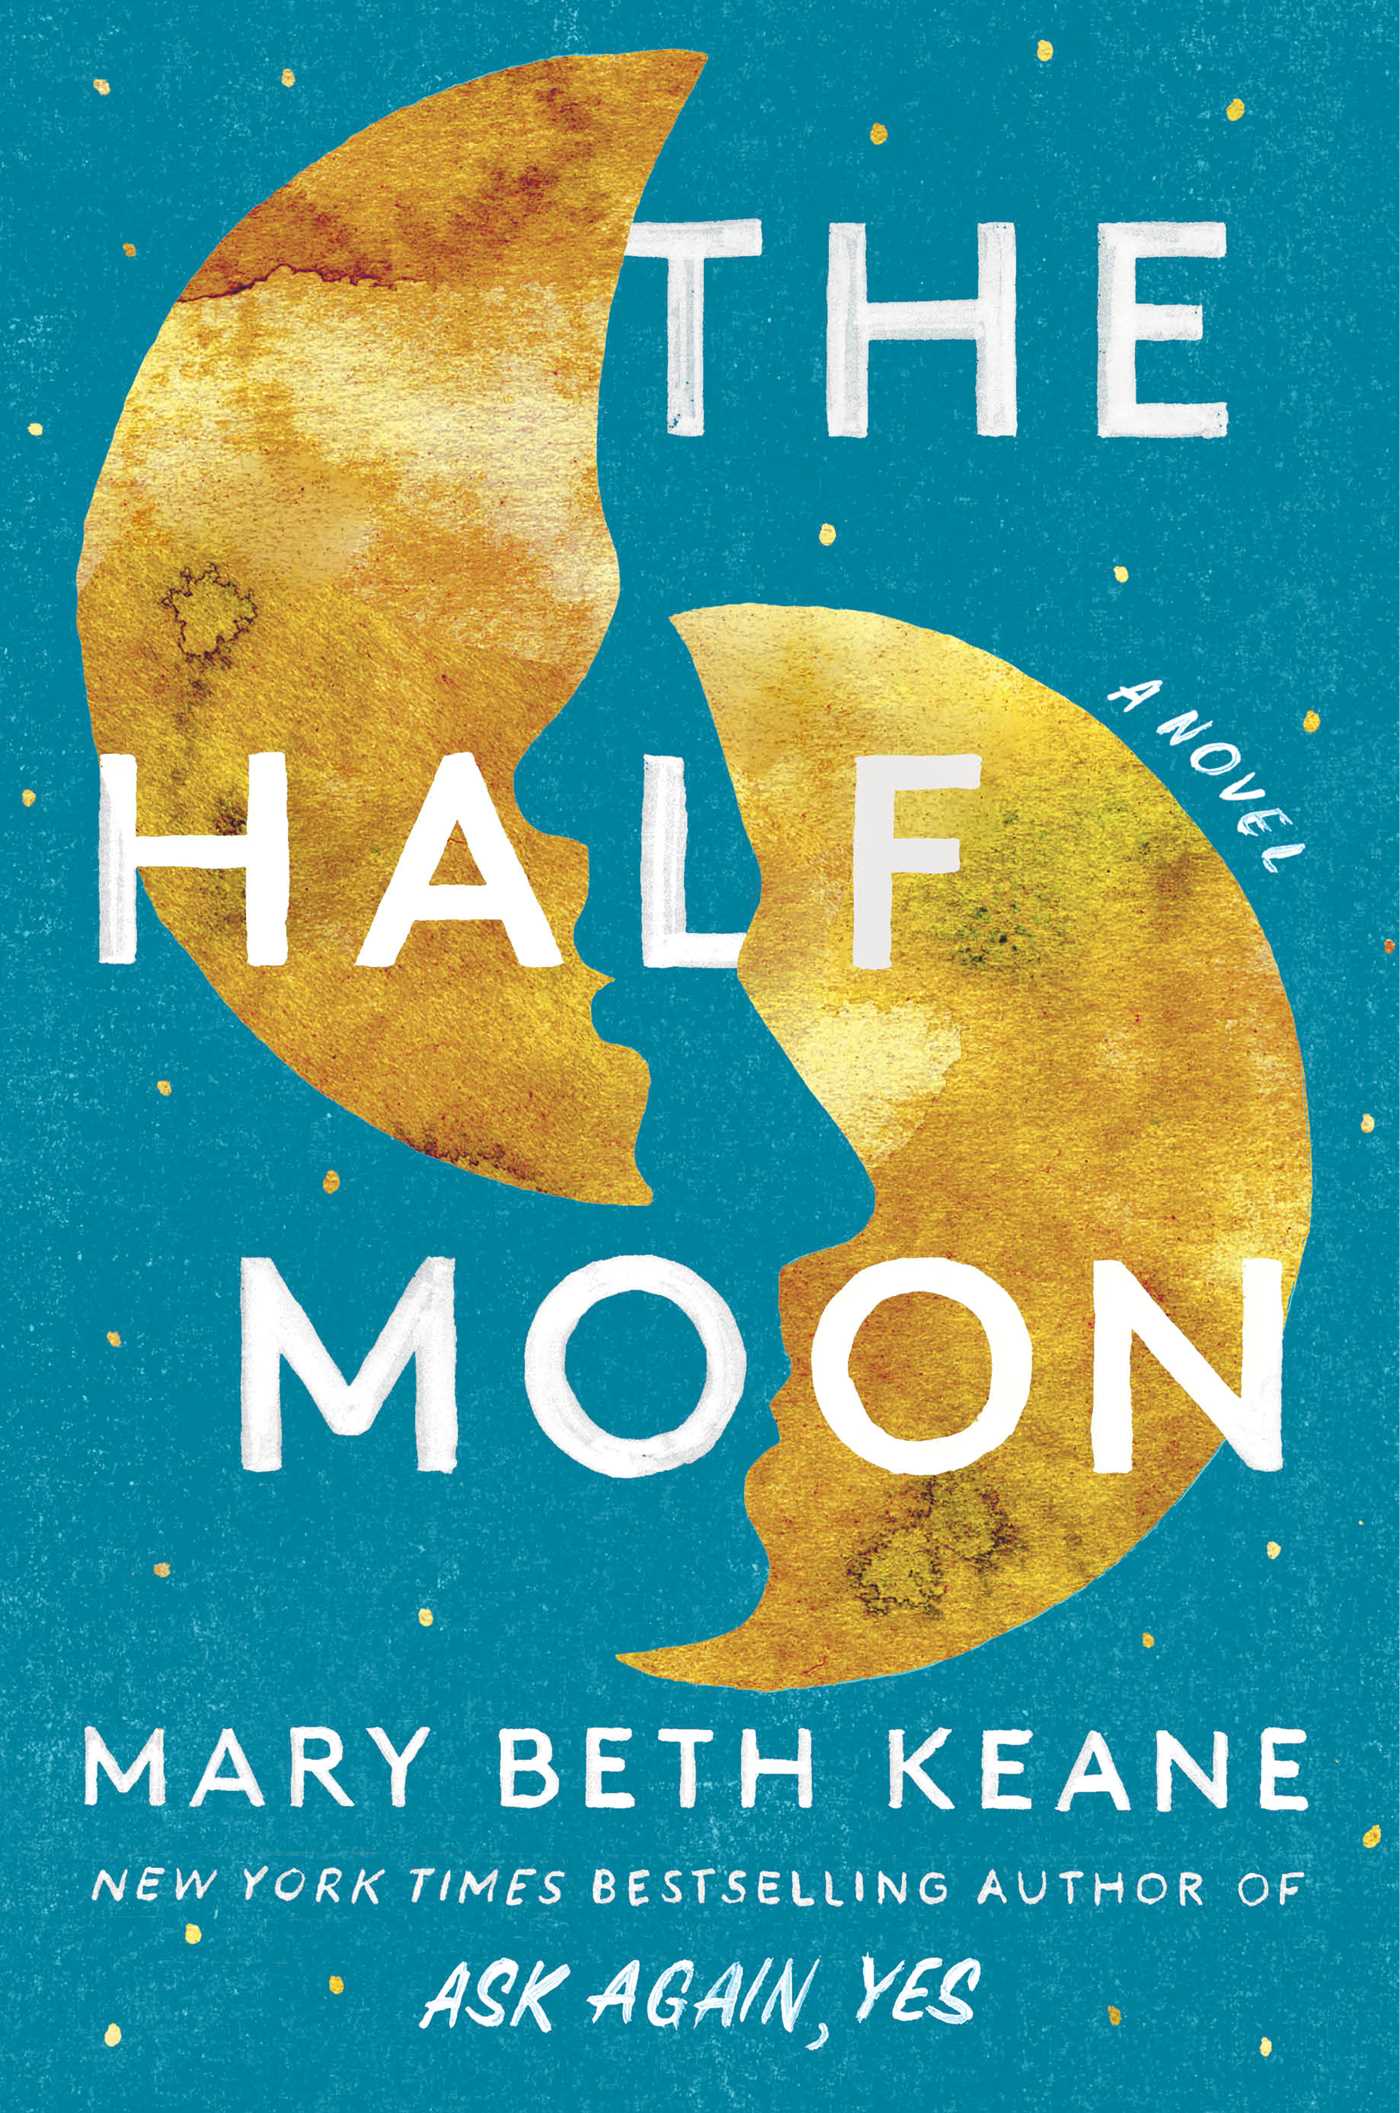 The Half Moon by Mary Beth Keane